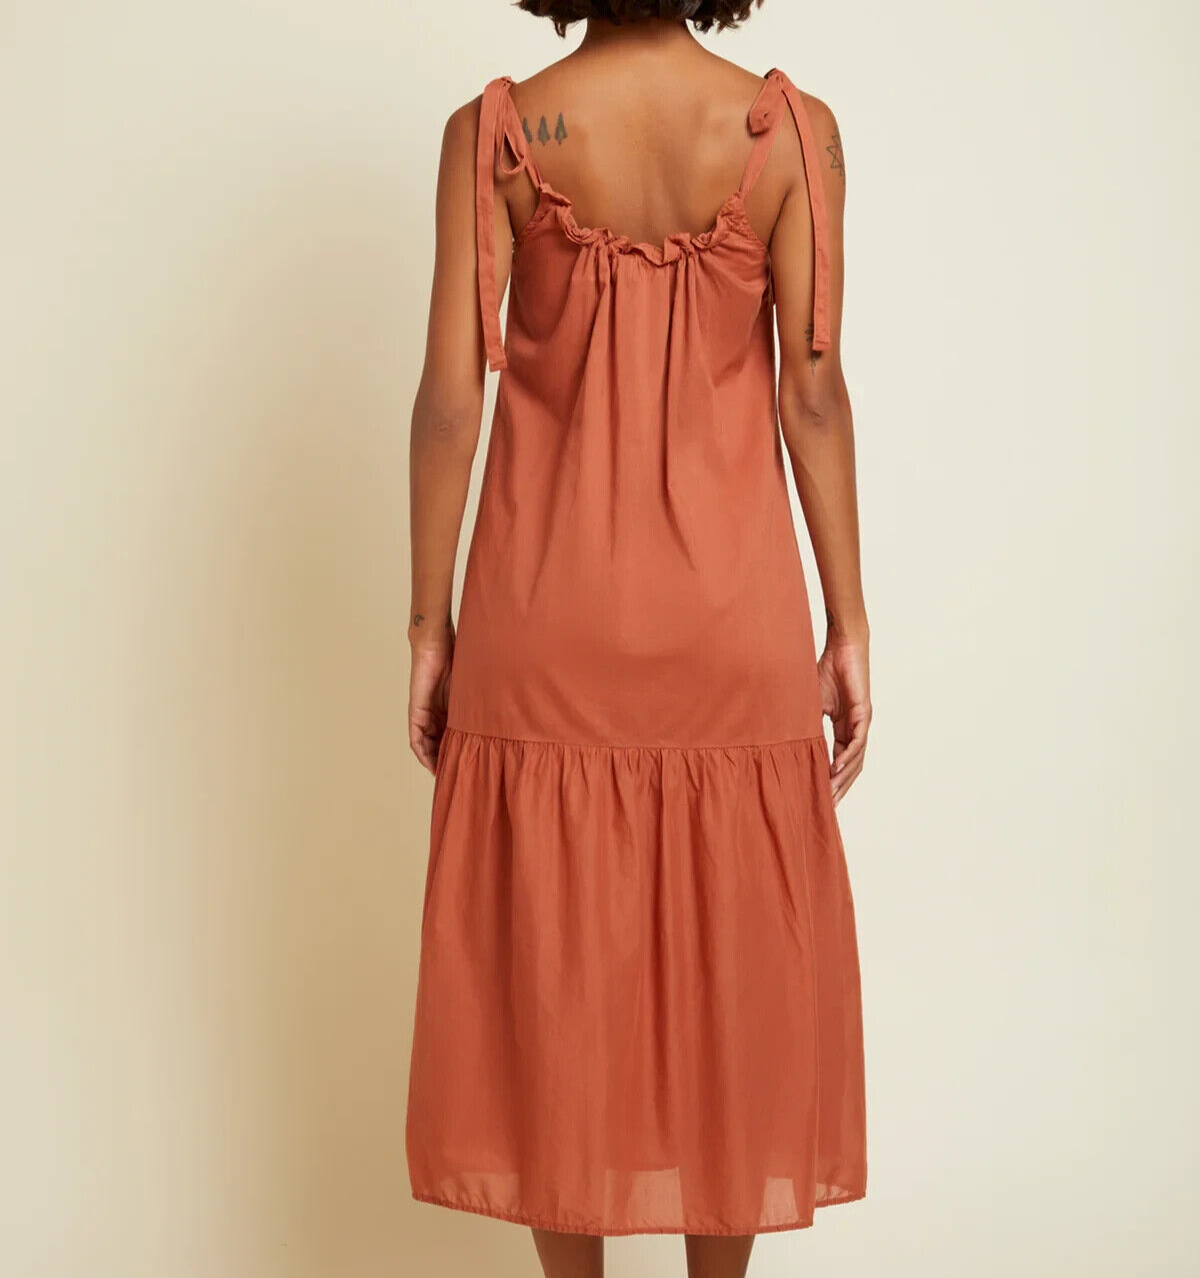 Nation LTD Sequoia Voluminous Dress in Tagin Size Medium NEW $220